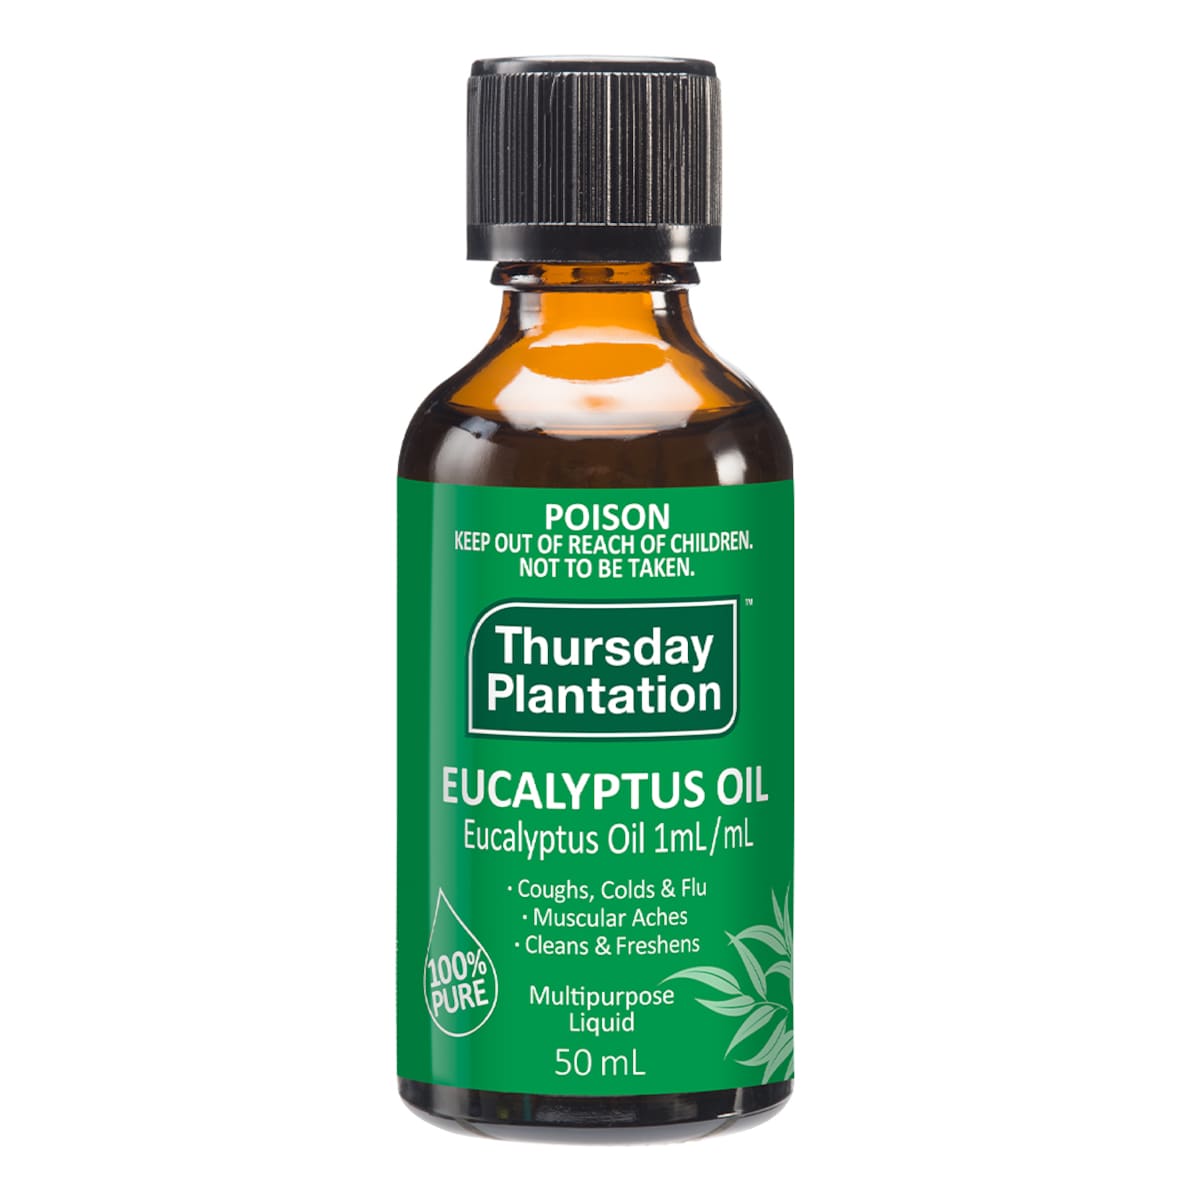 Thursday Plantation Eucalyptus Oil 50ml